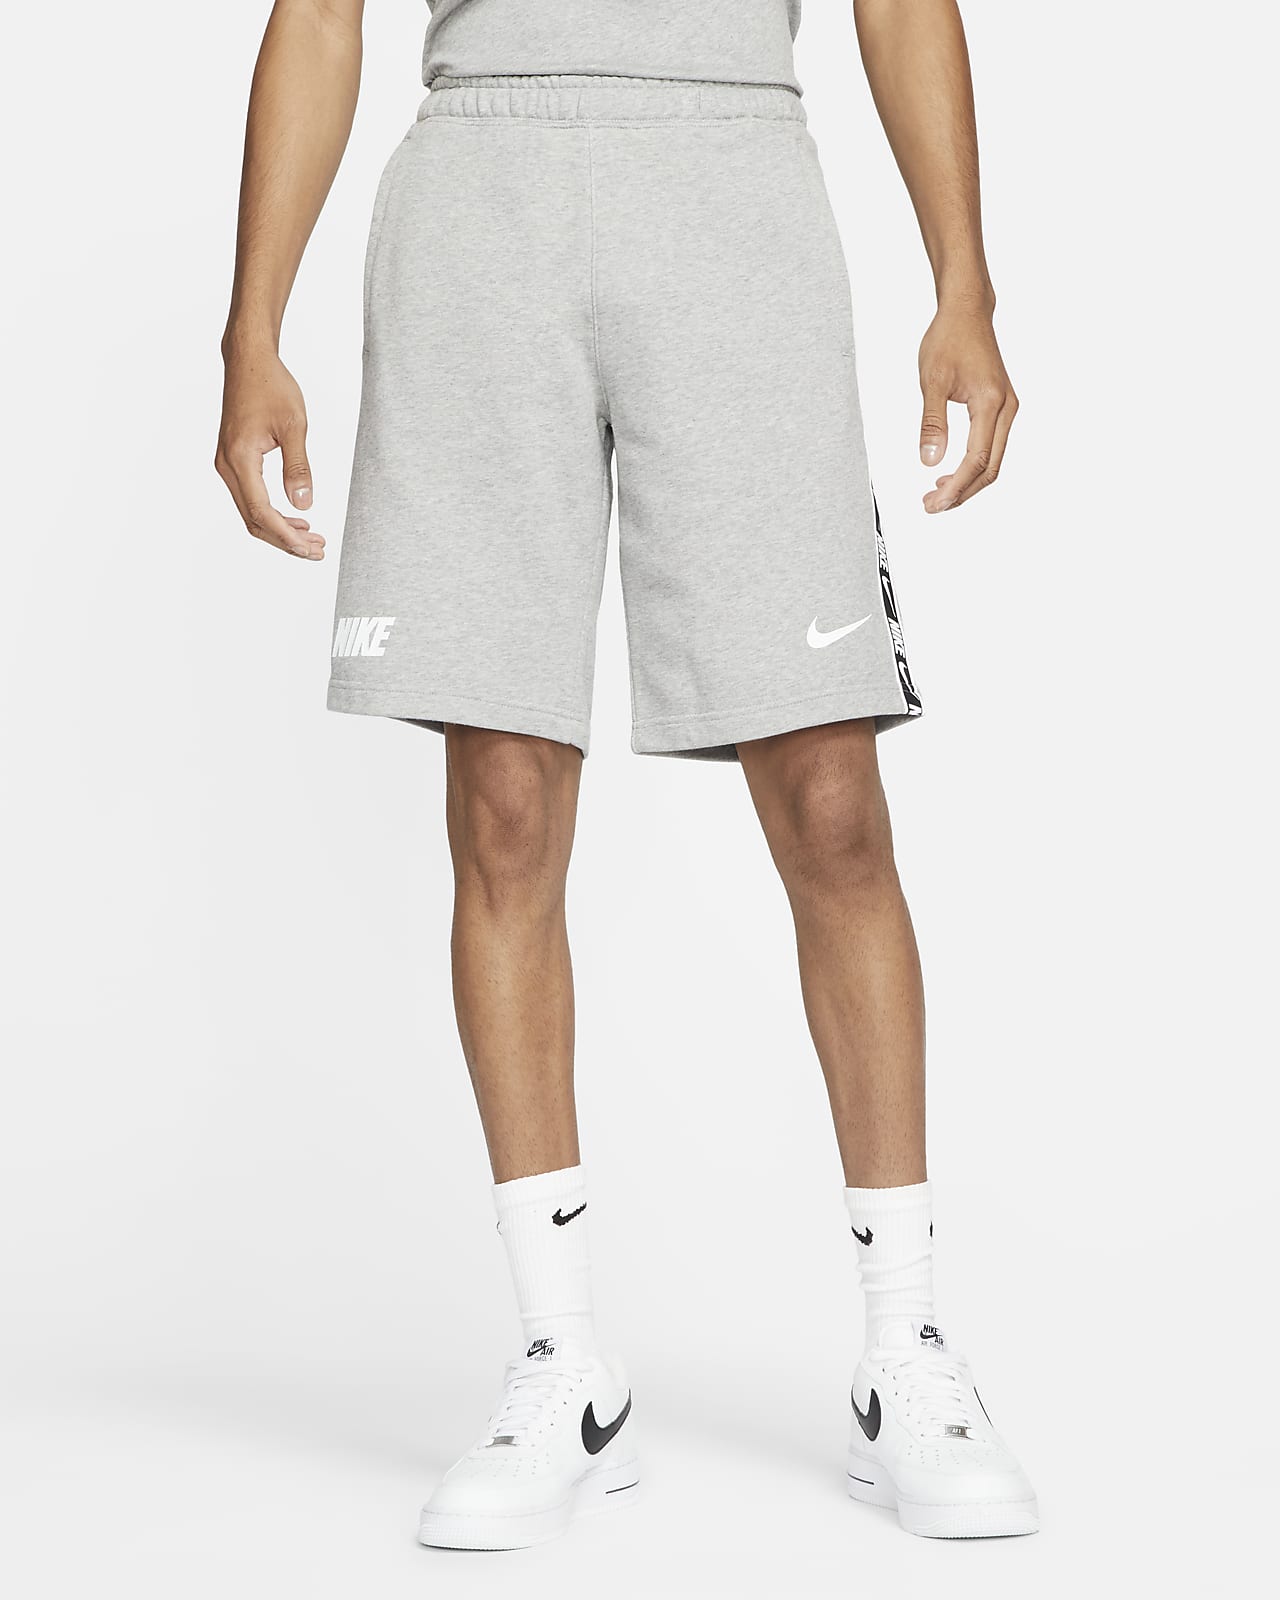 French Terry Shorts. Nike FI